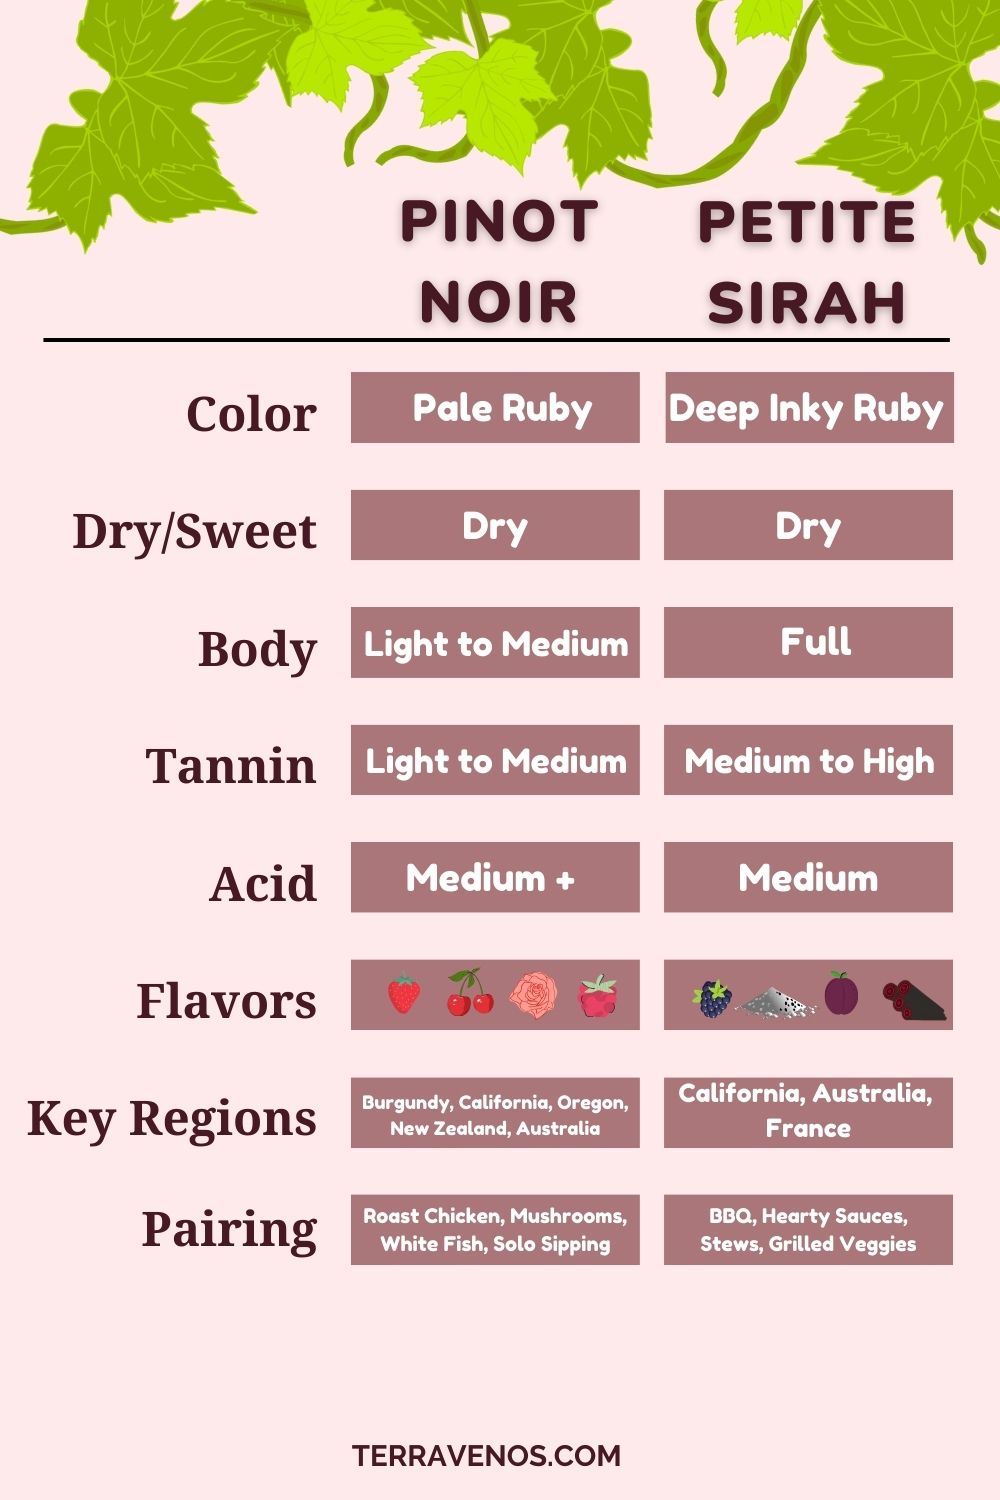 petite sirah vs pinot noir wine comparison infographic